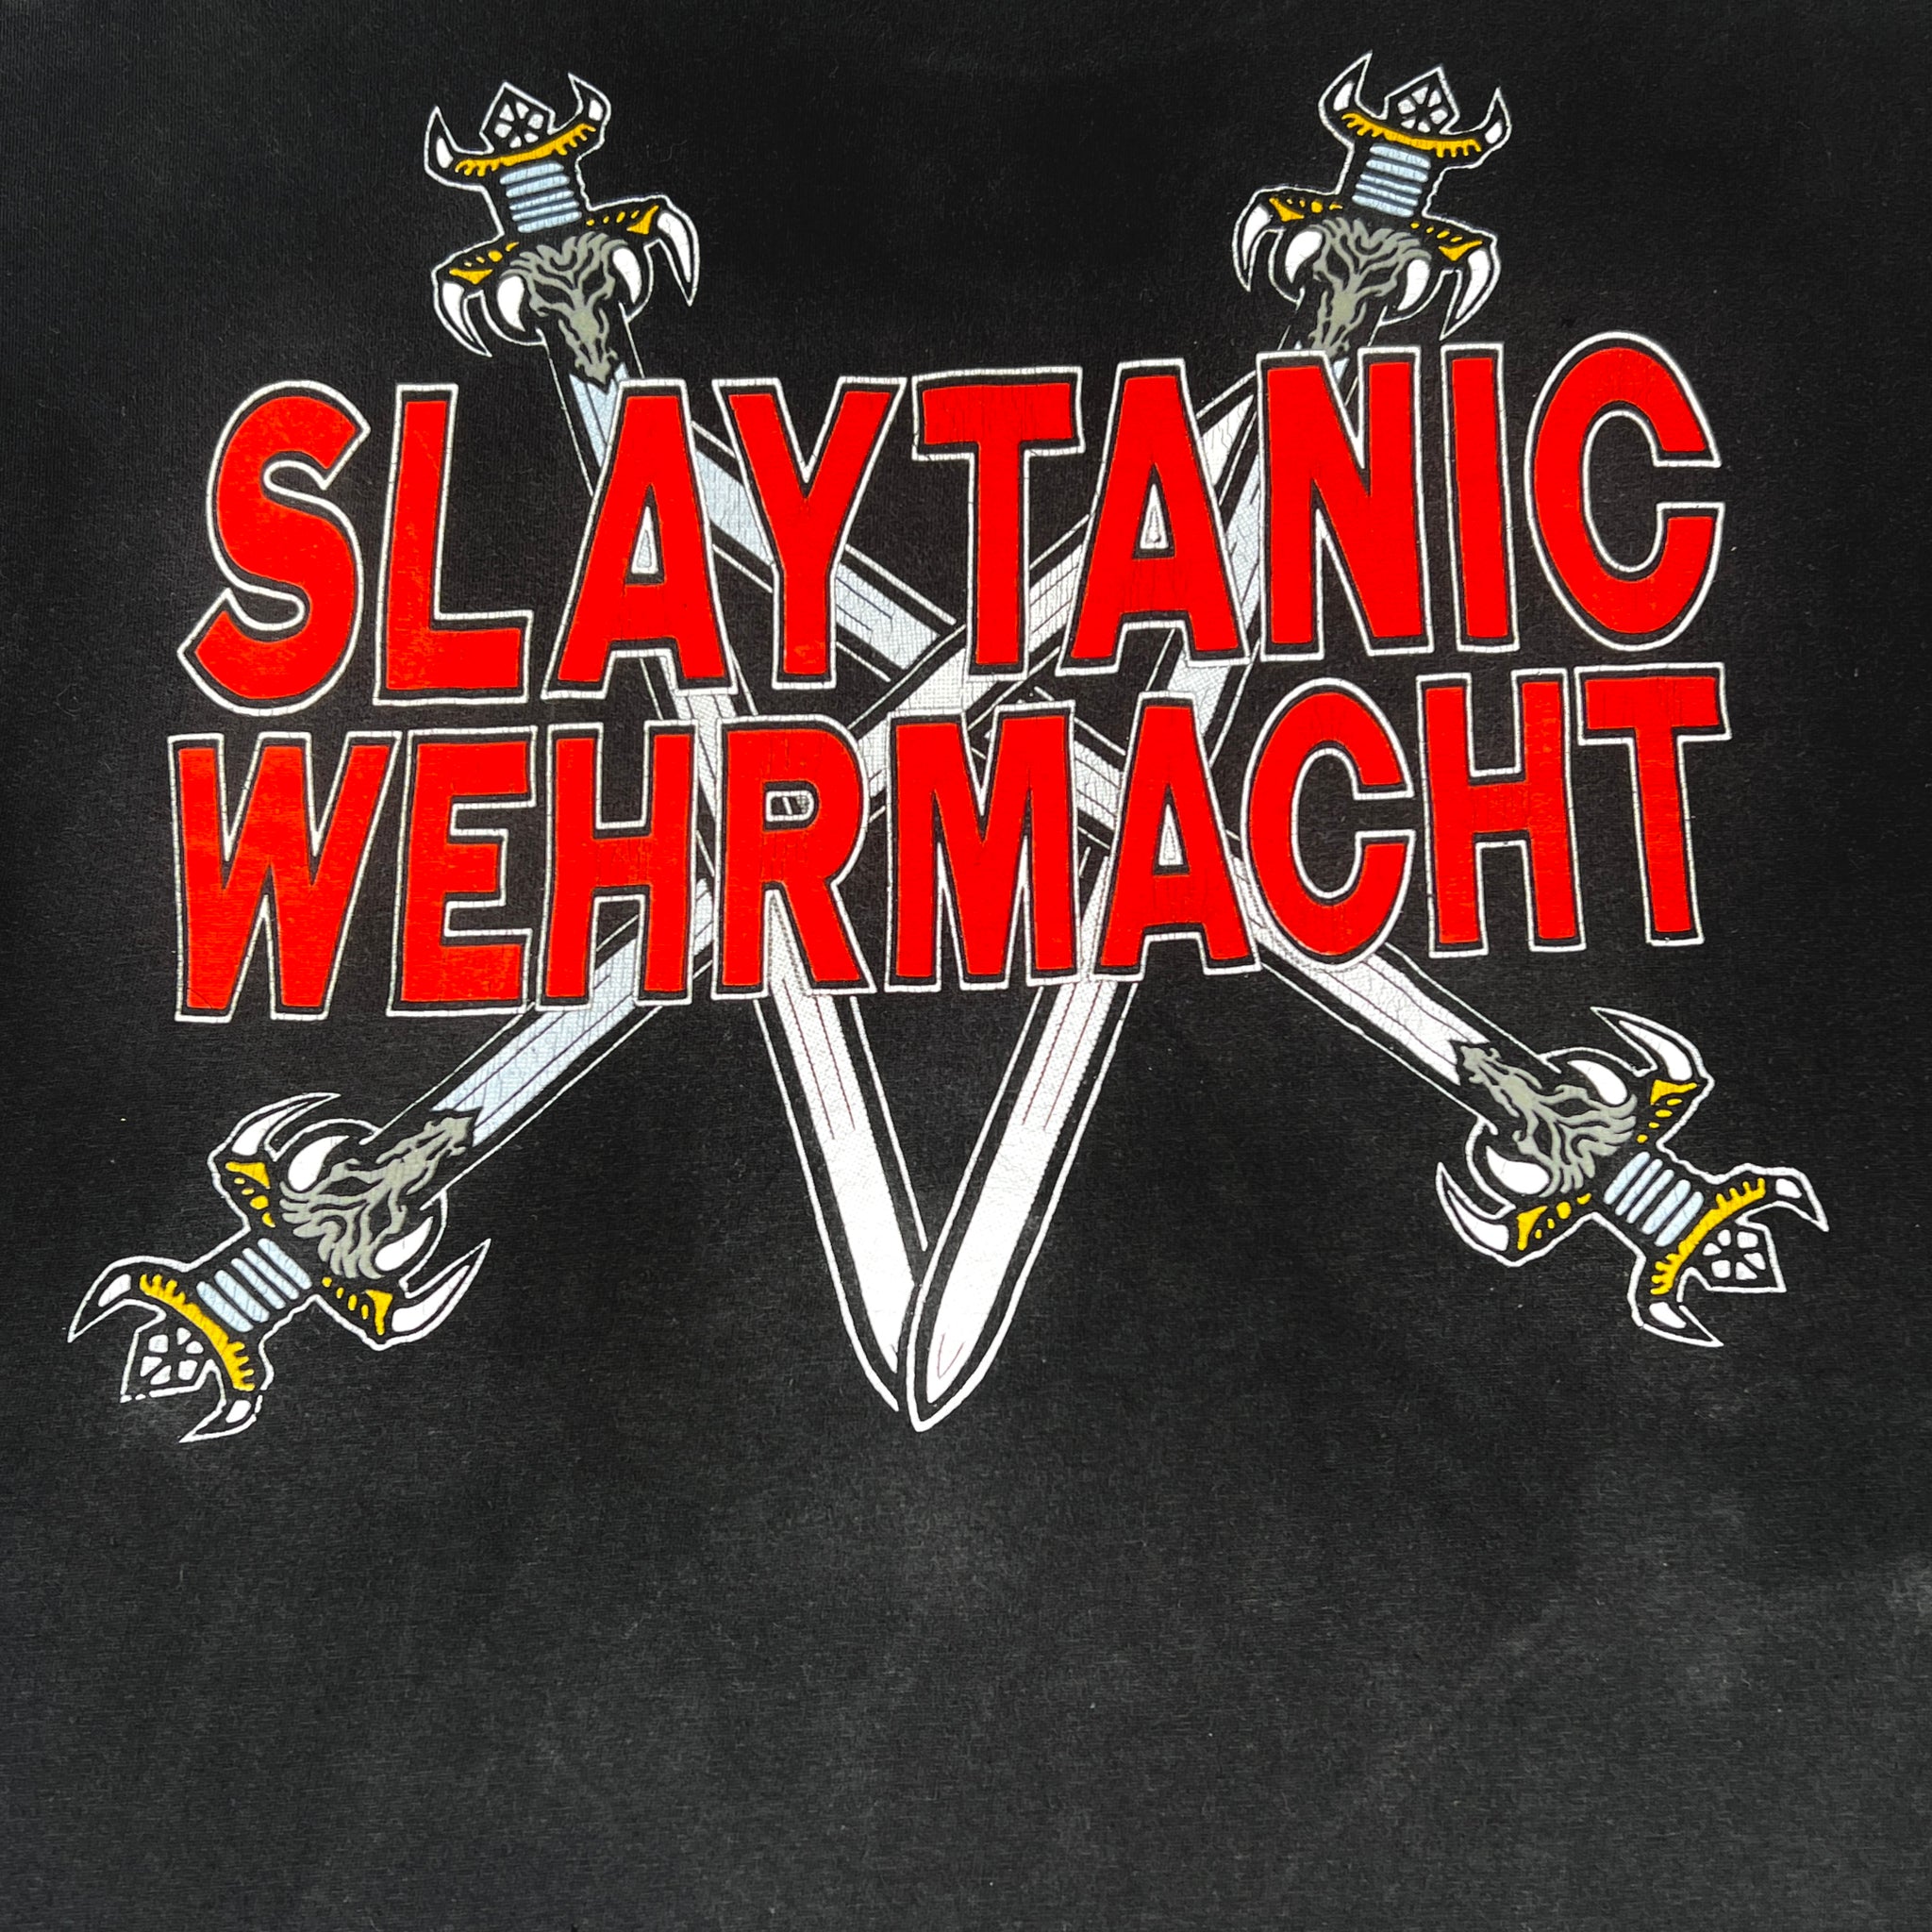 SLAYER | ‘Slaytanic Wehrmacht’ | 1988 | XL